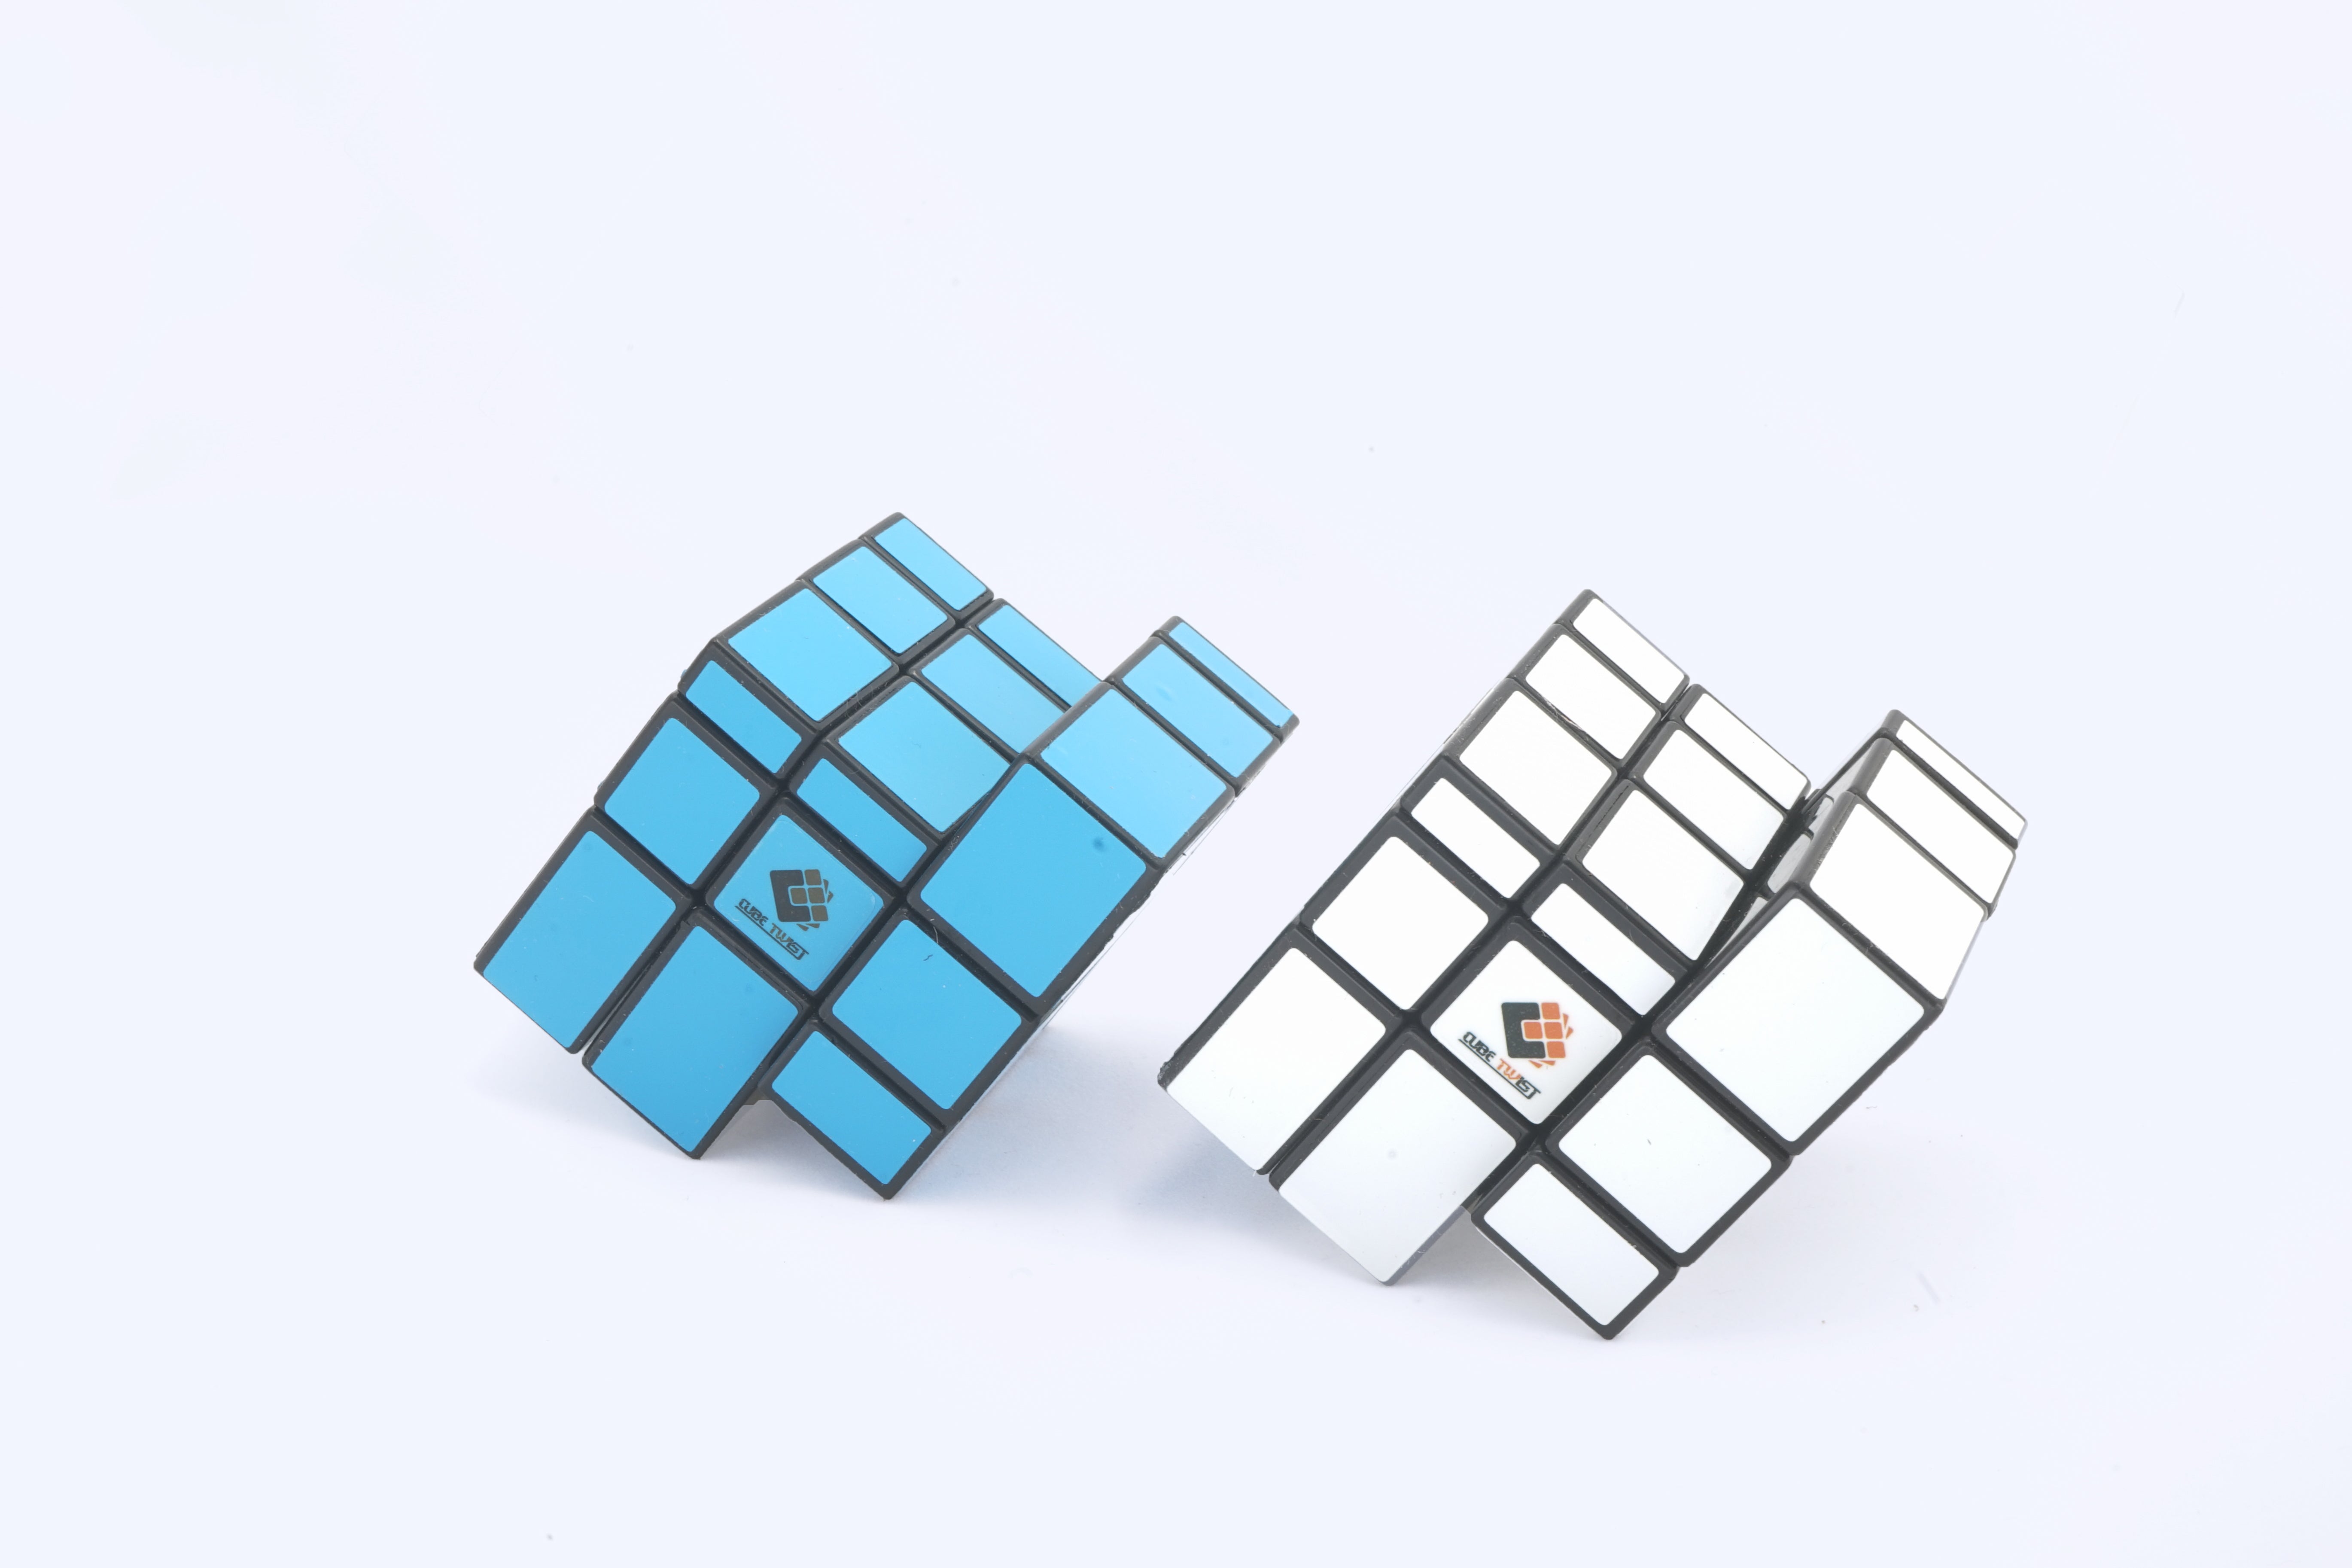 CubeTwist Mirror Block